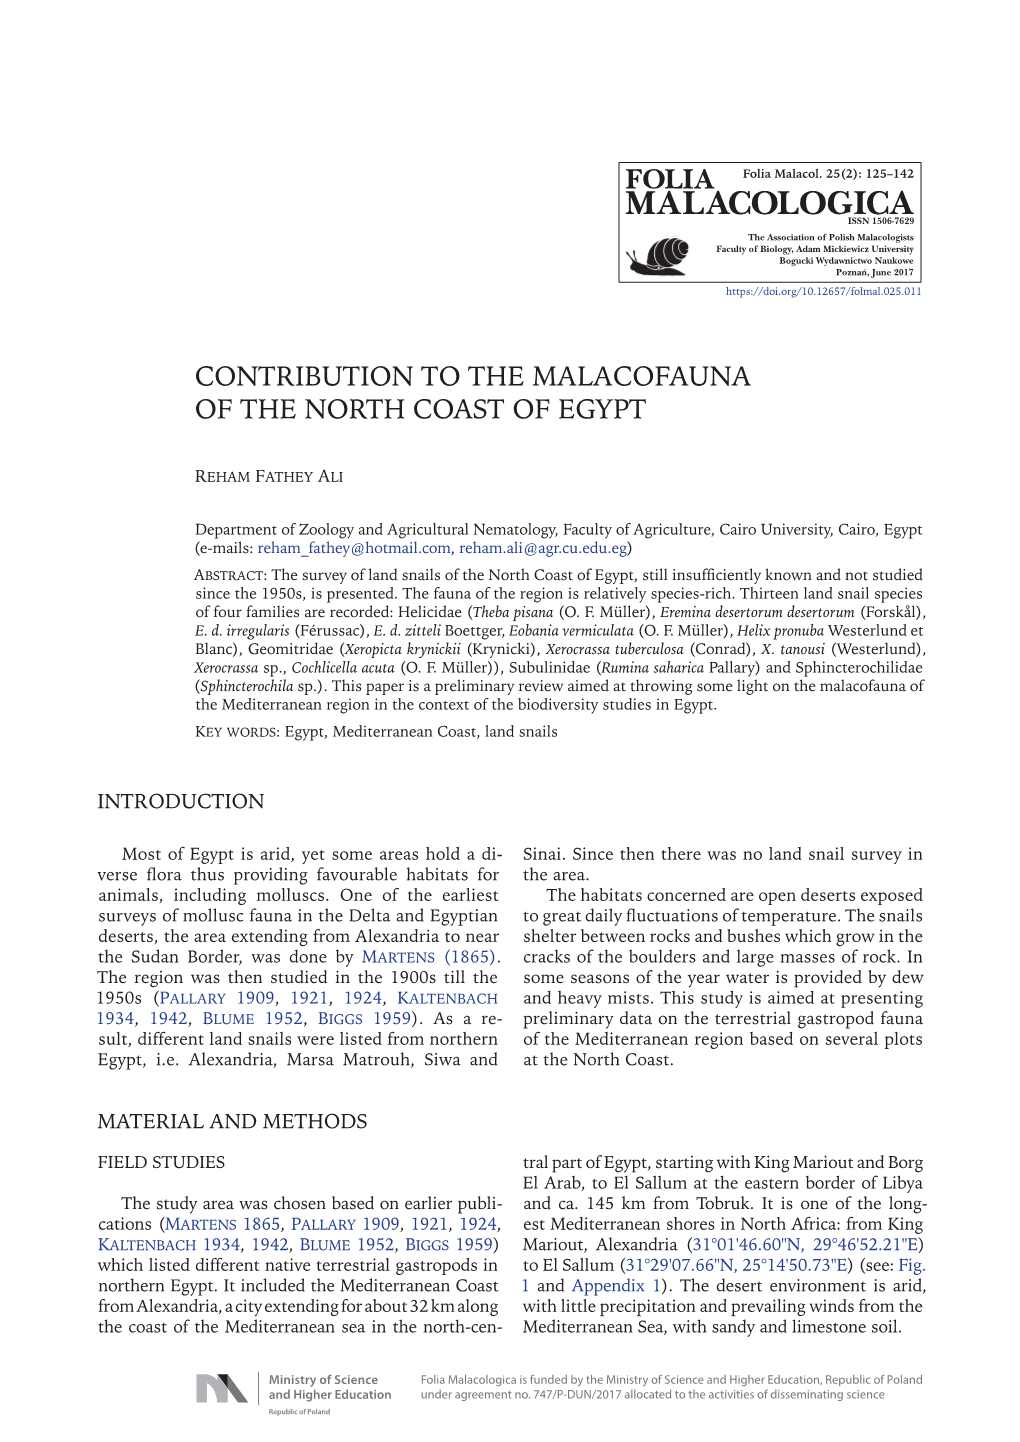 Contribution to the Malacofauna of the North Coast of Egypt